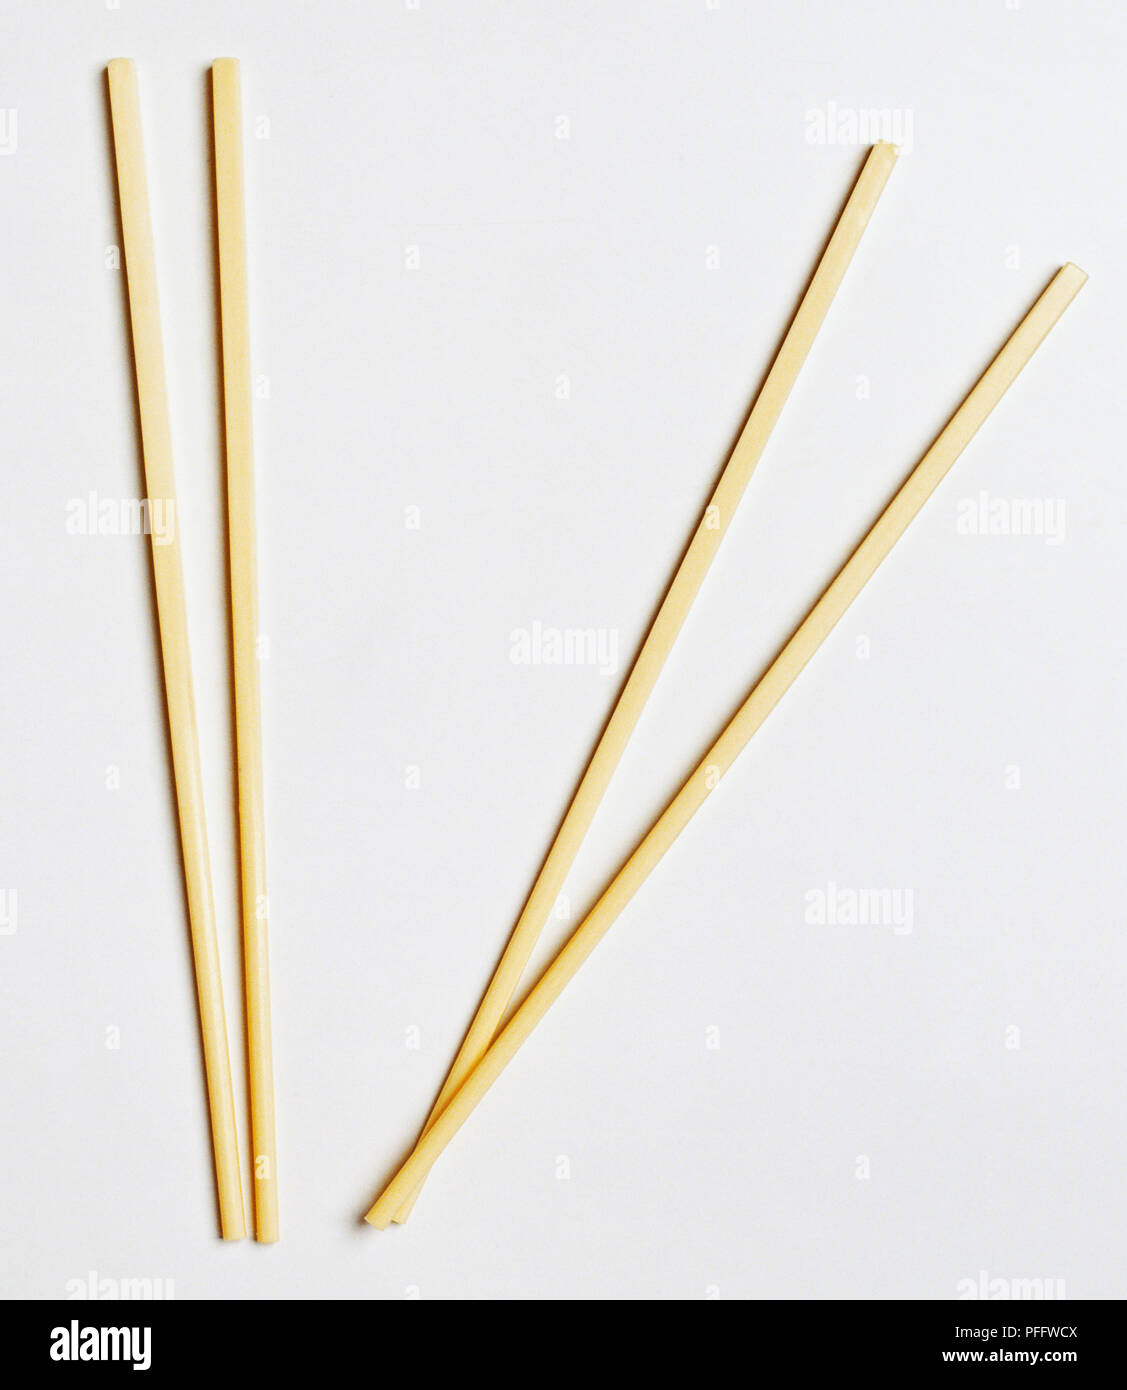 Two sets of plain wooden chopsticks Stock Photo